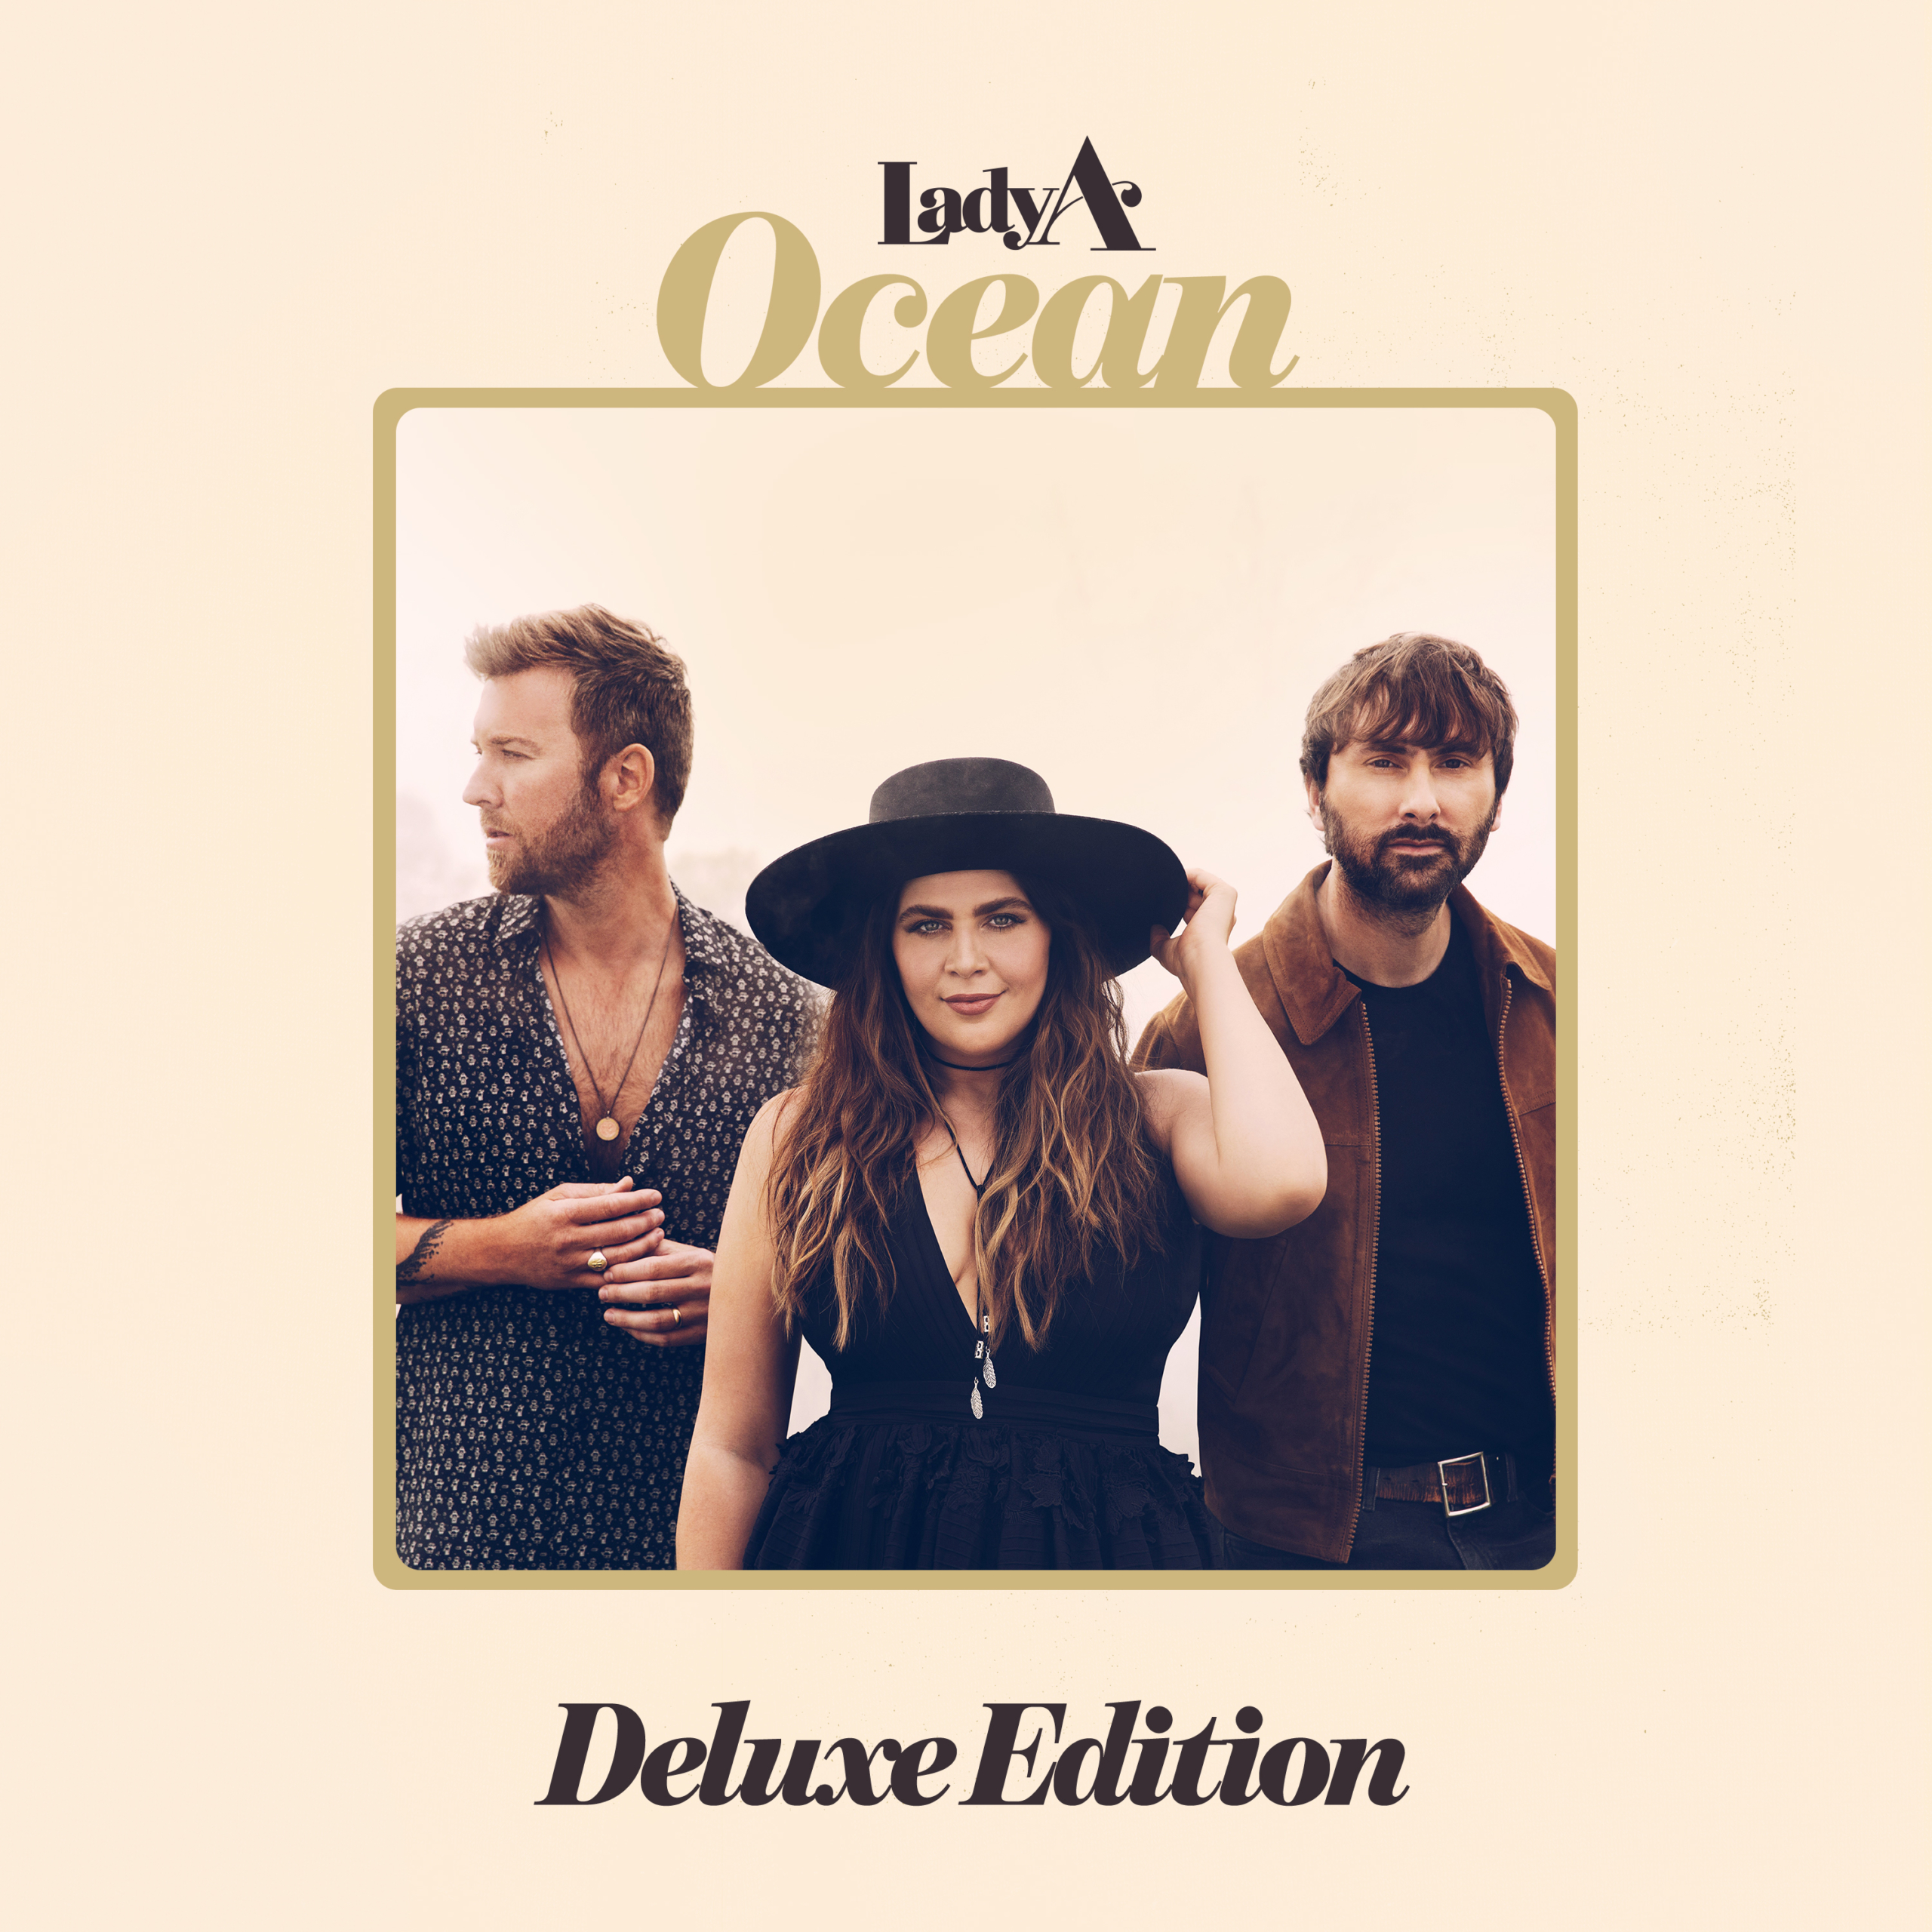 Lady A Ocean Deluxe Album